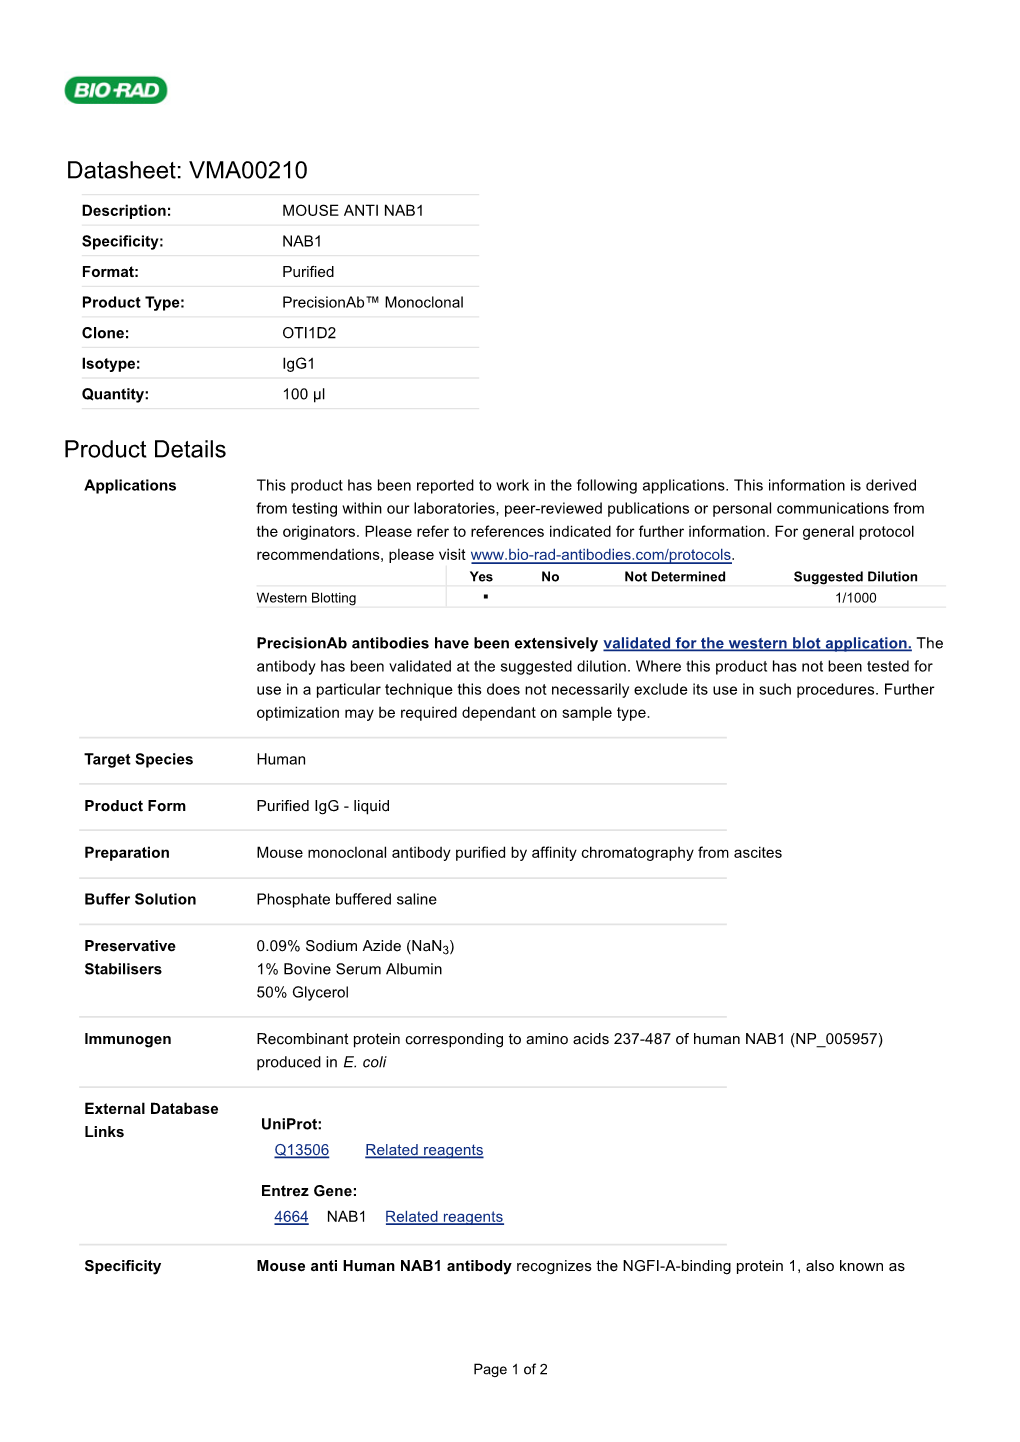 Datasheet: VMA00210 Product Details